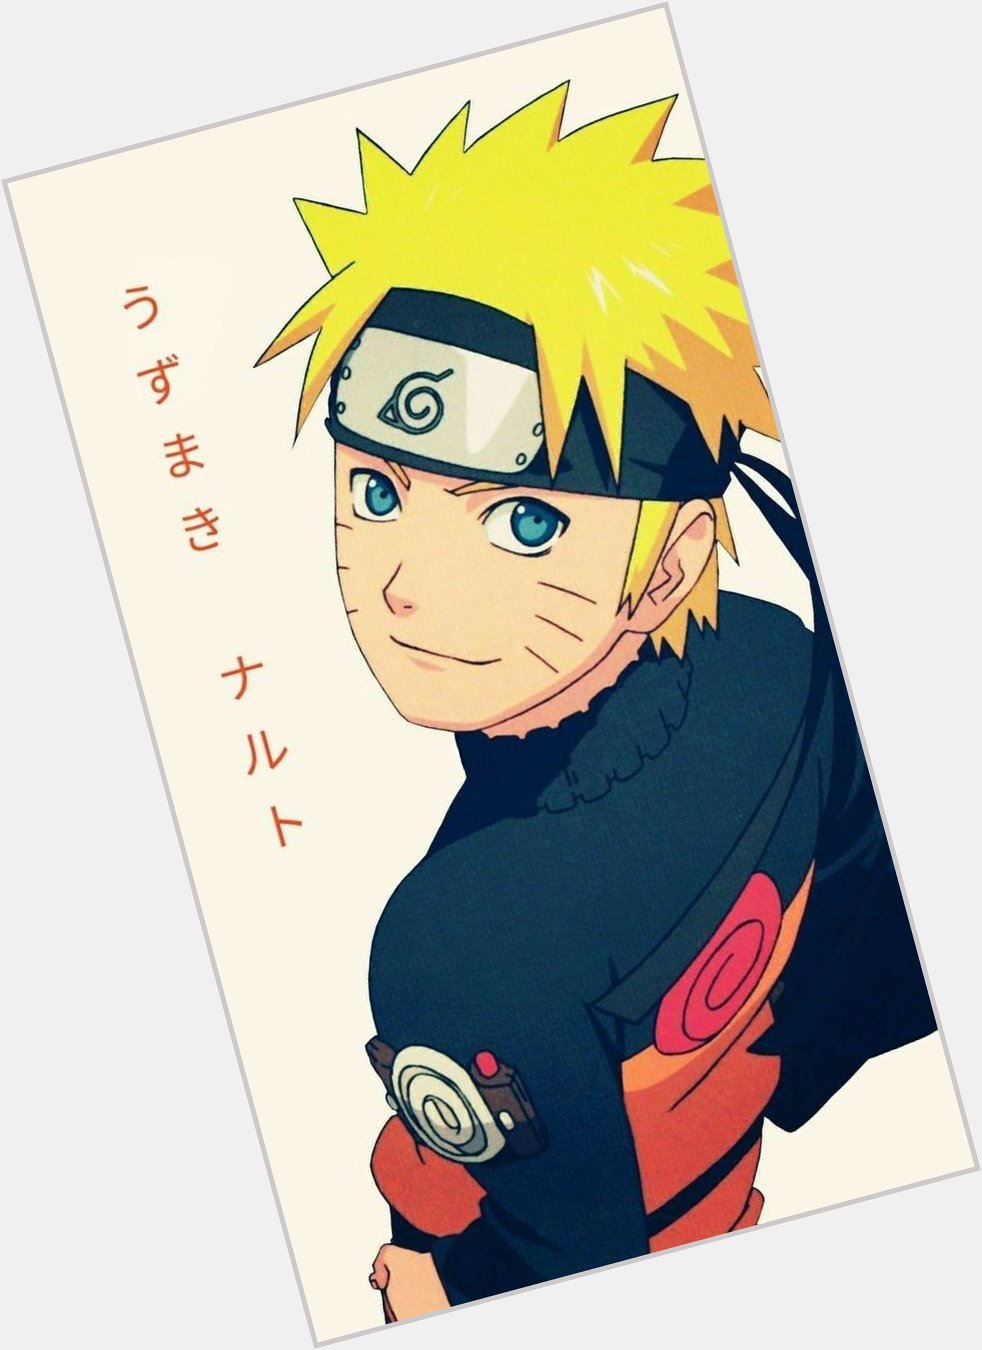 Happy birthday, Naruto Uzumaki Selfless Soul, The Greatest Fictional and Inspiration to billions. 